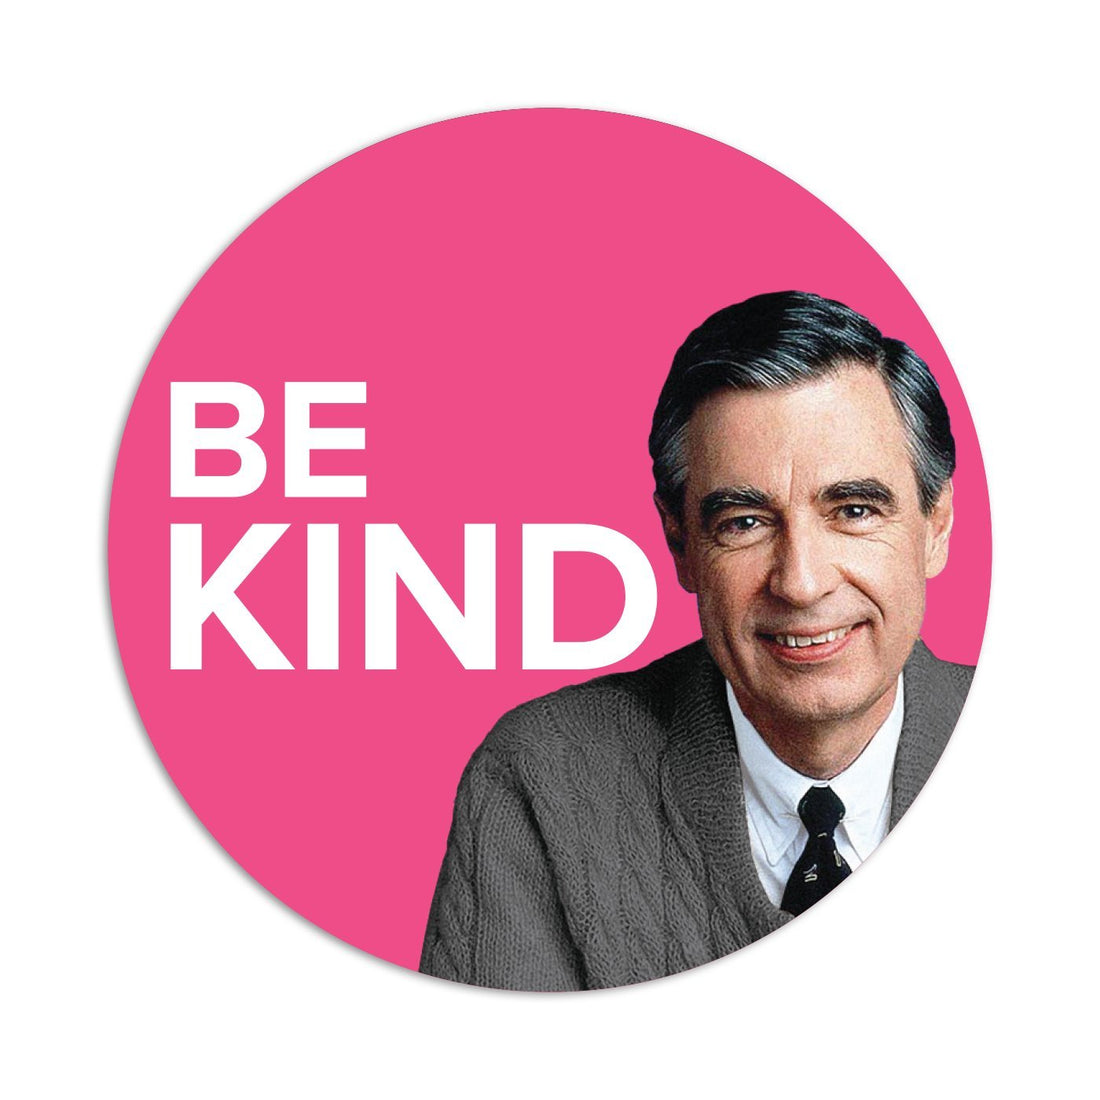 Mister Rogers "Be Kind" Vinyl Sticker